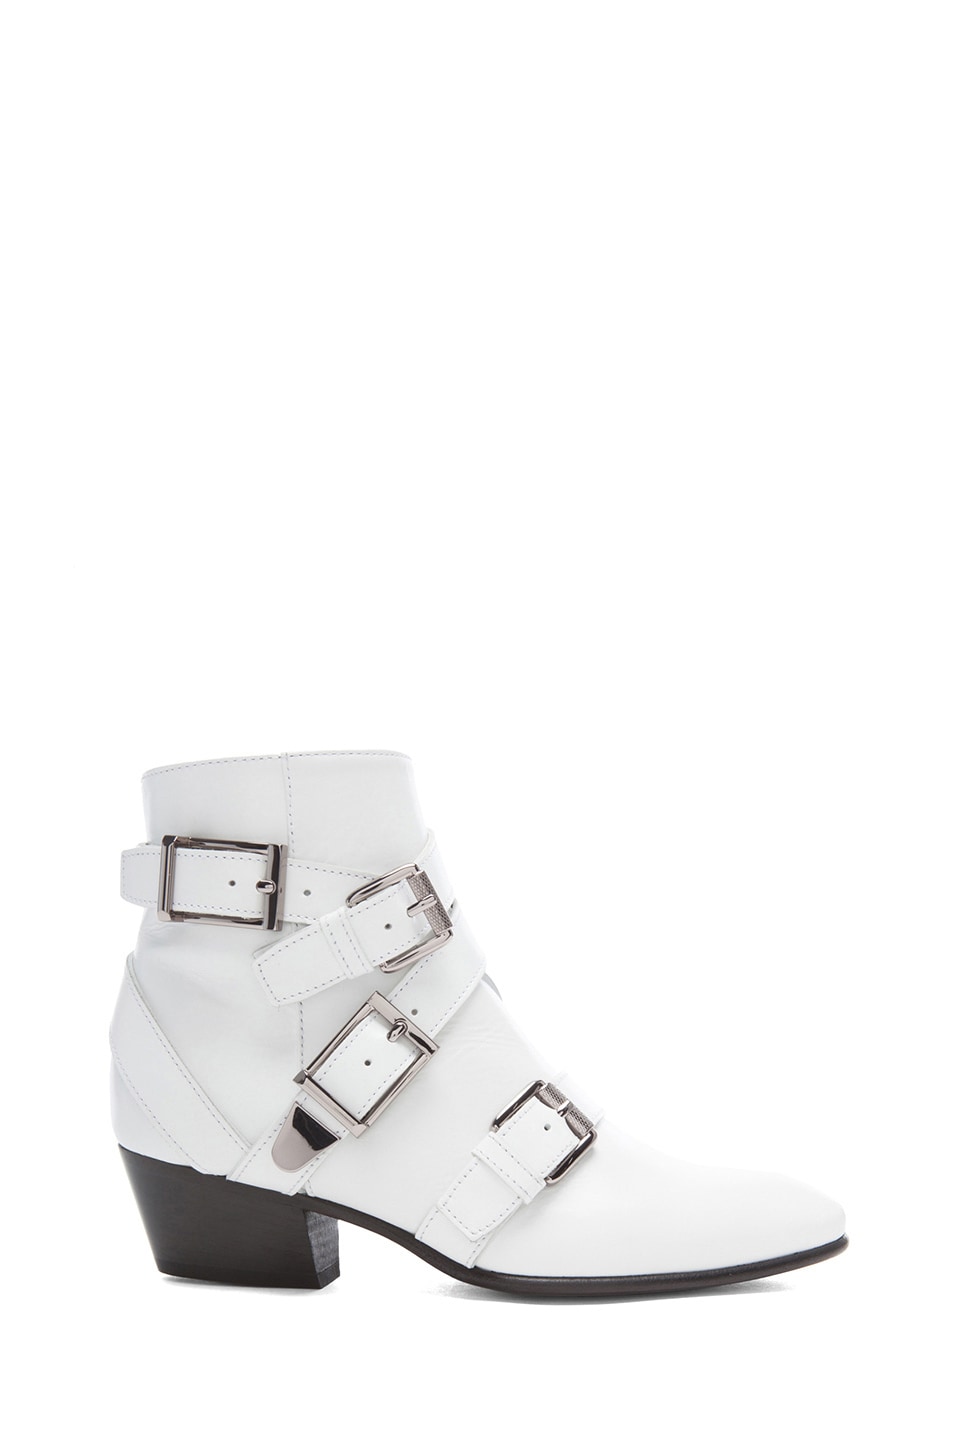 Barbara Bui Leather Buckle Booties in White | FWRD